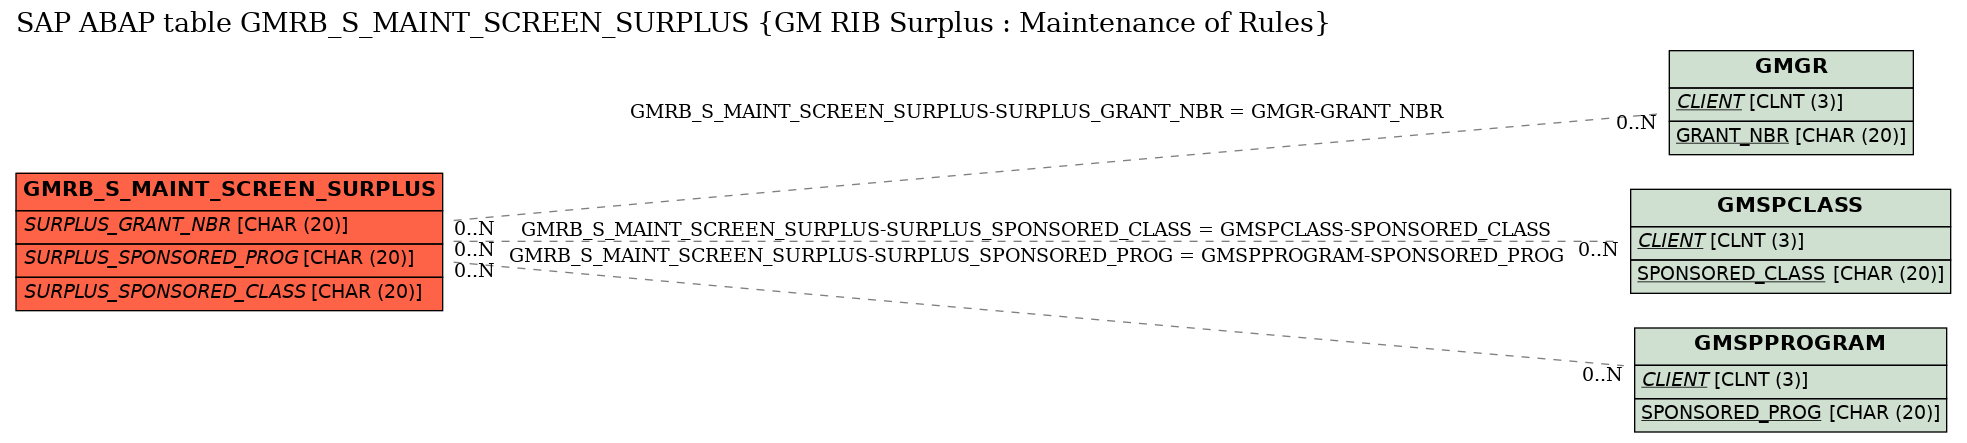 E-R Diagram for table GMRB_S_MAINT_SCREEN_SURPLUS (GM RIB Surplus : Maintenance of Rules)